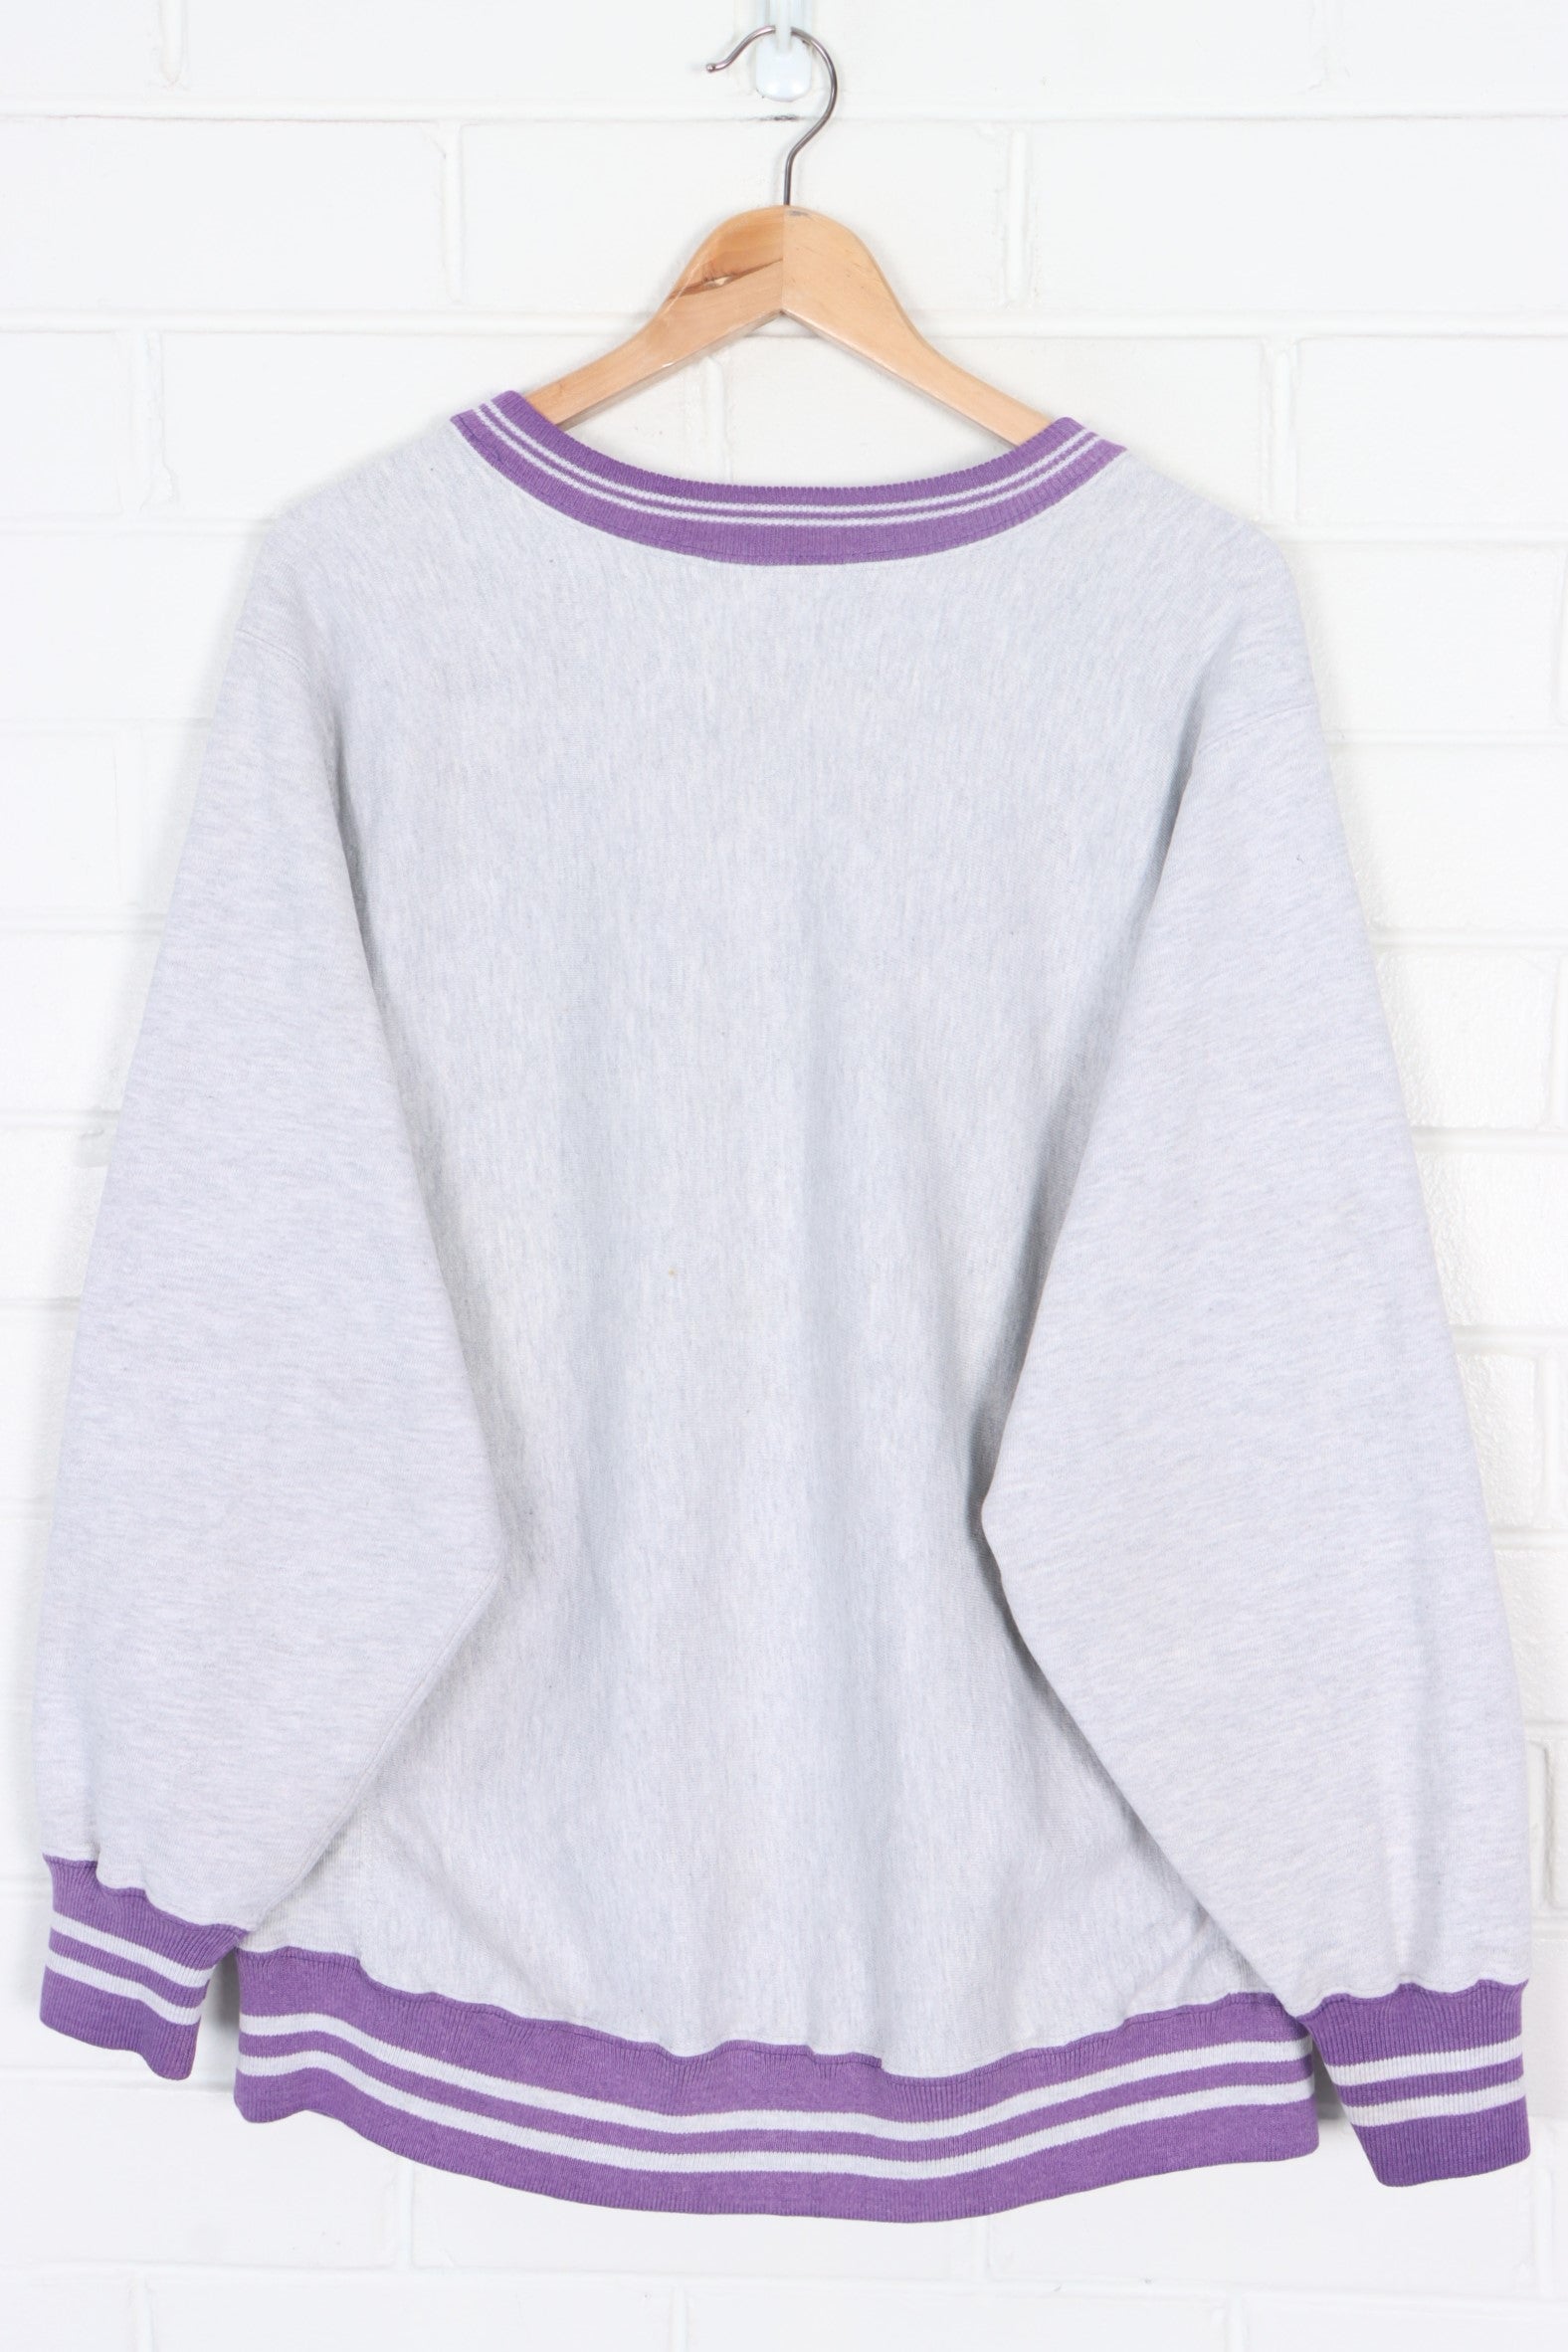 CHAMPION Reverse Weave Grey Marle & Purple Ringer Sweatshirt (M-L